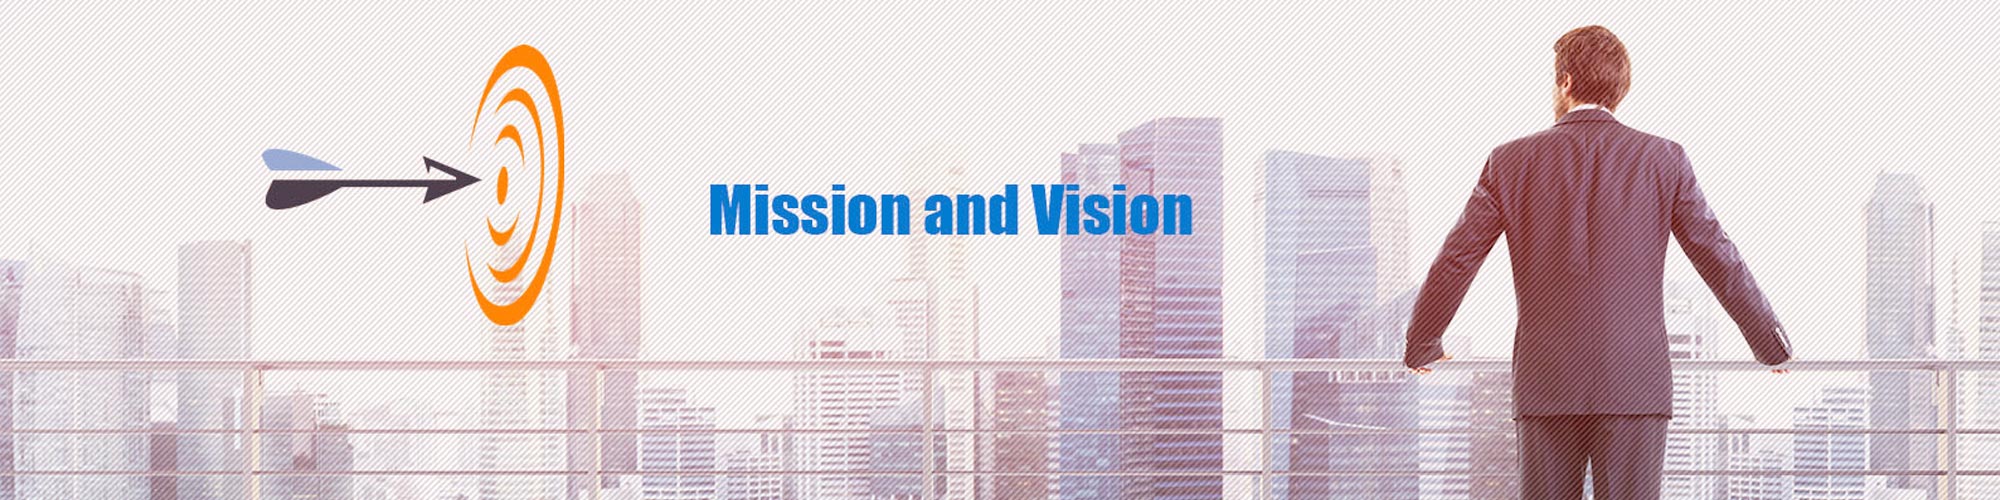 Vinex Mission and Vision